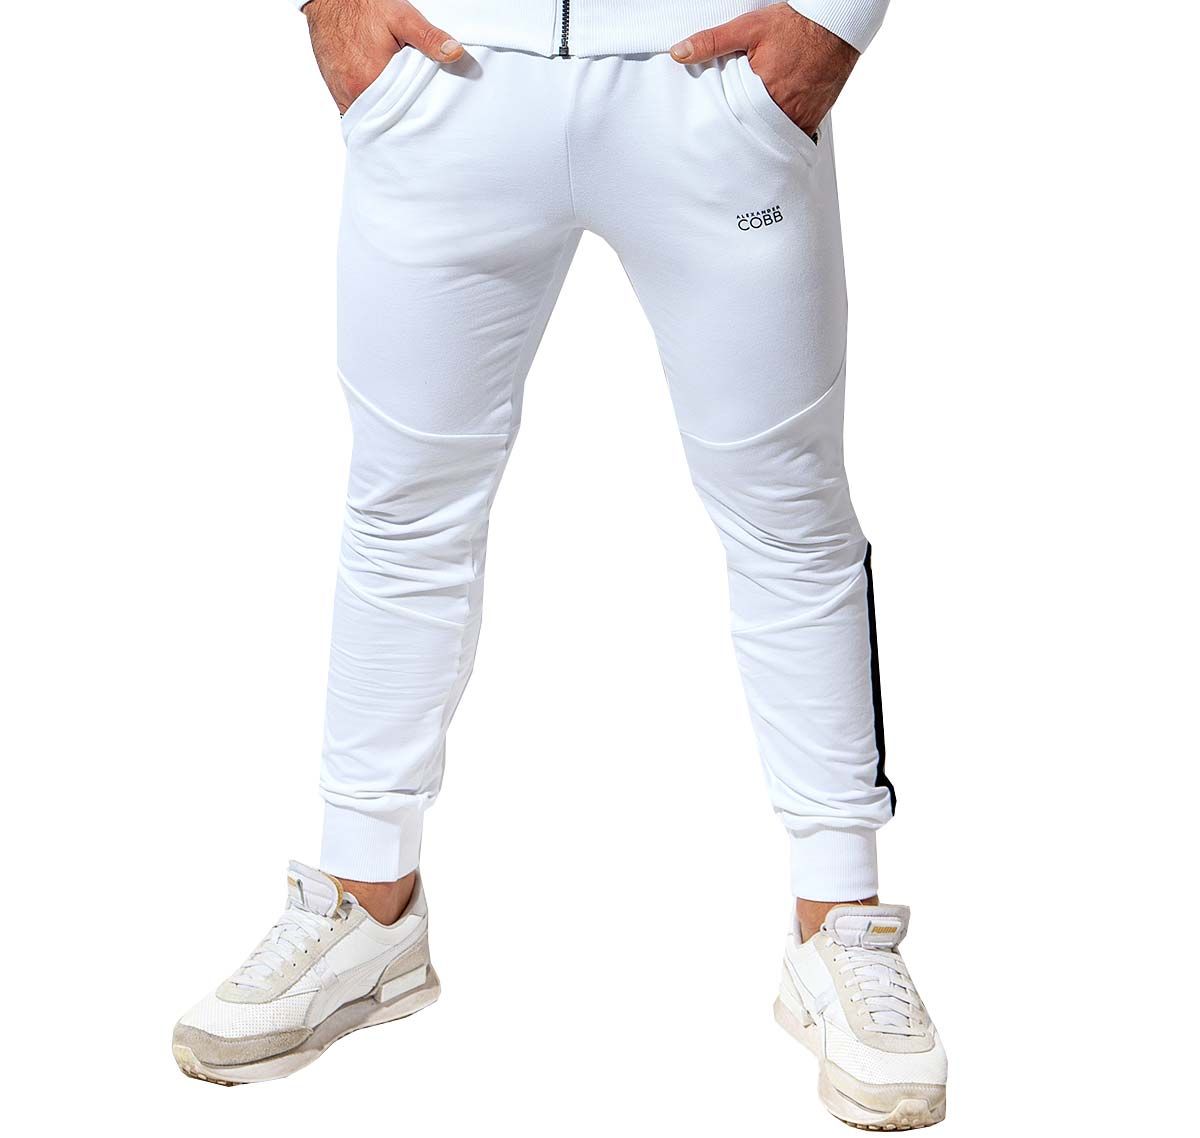 Alexander COBB Training pants PANTS WHITE BLACK, white